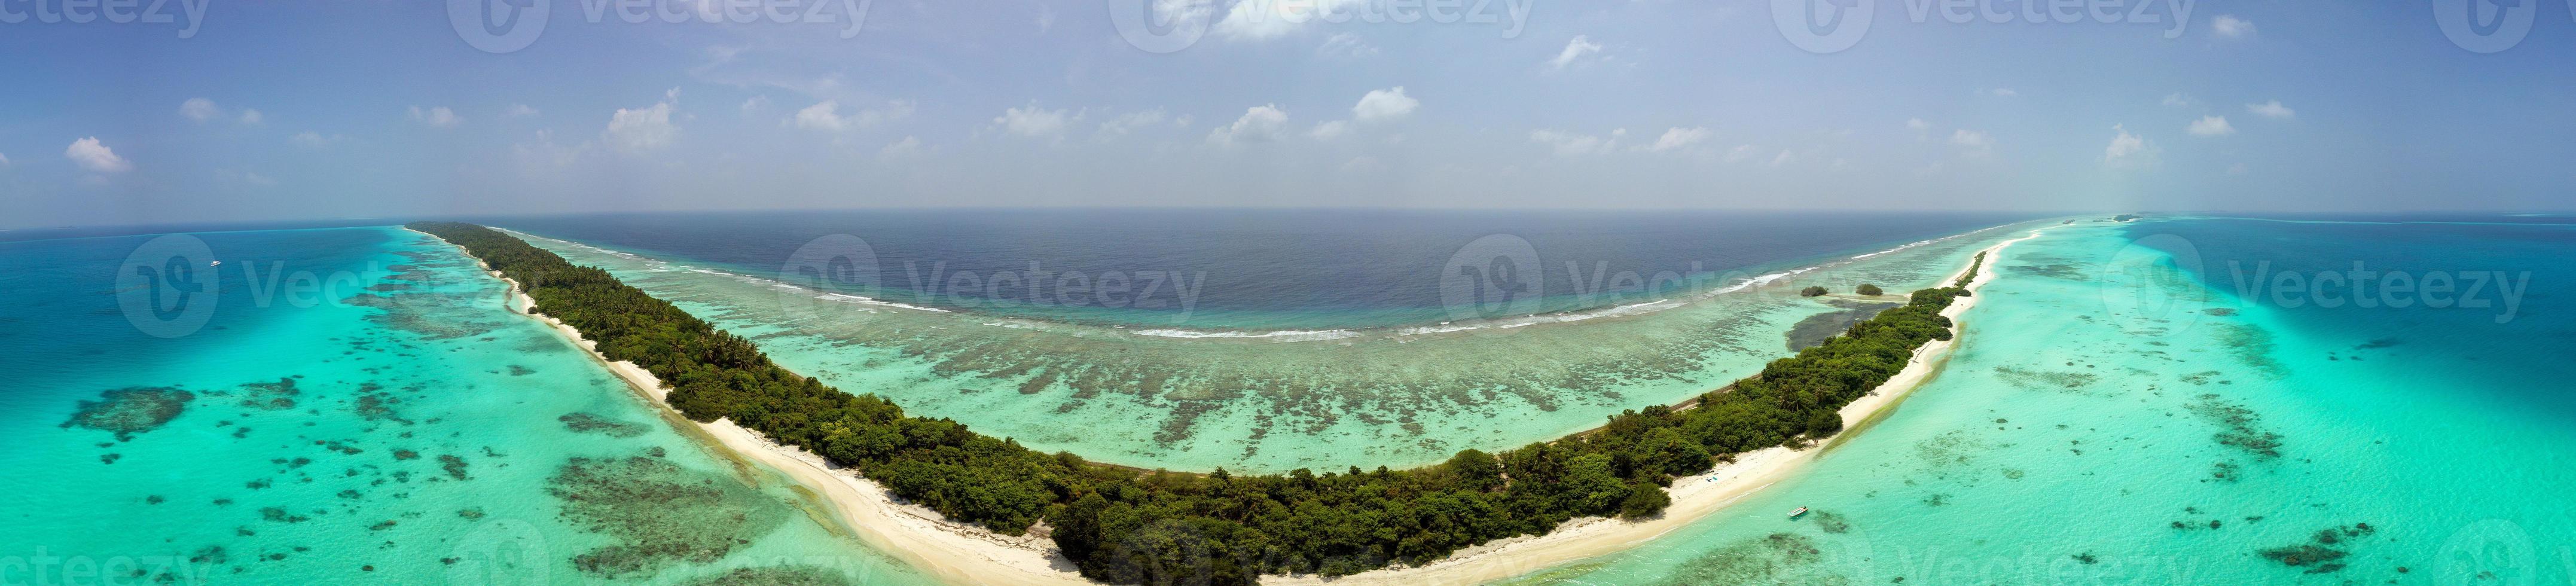 Maldiven antenne visie panorama landschap foto